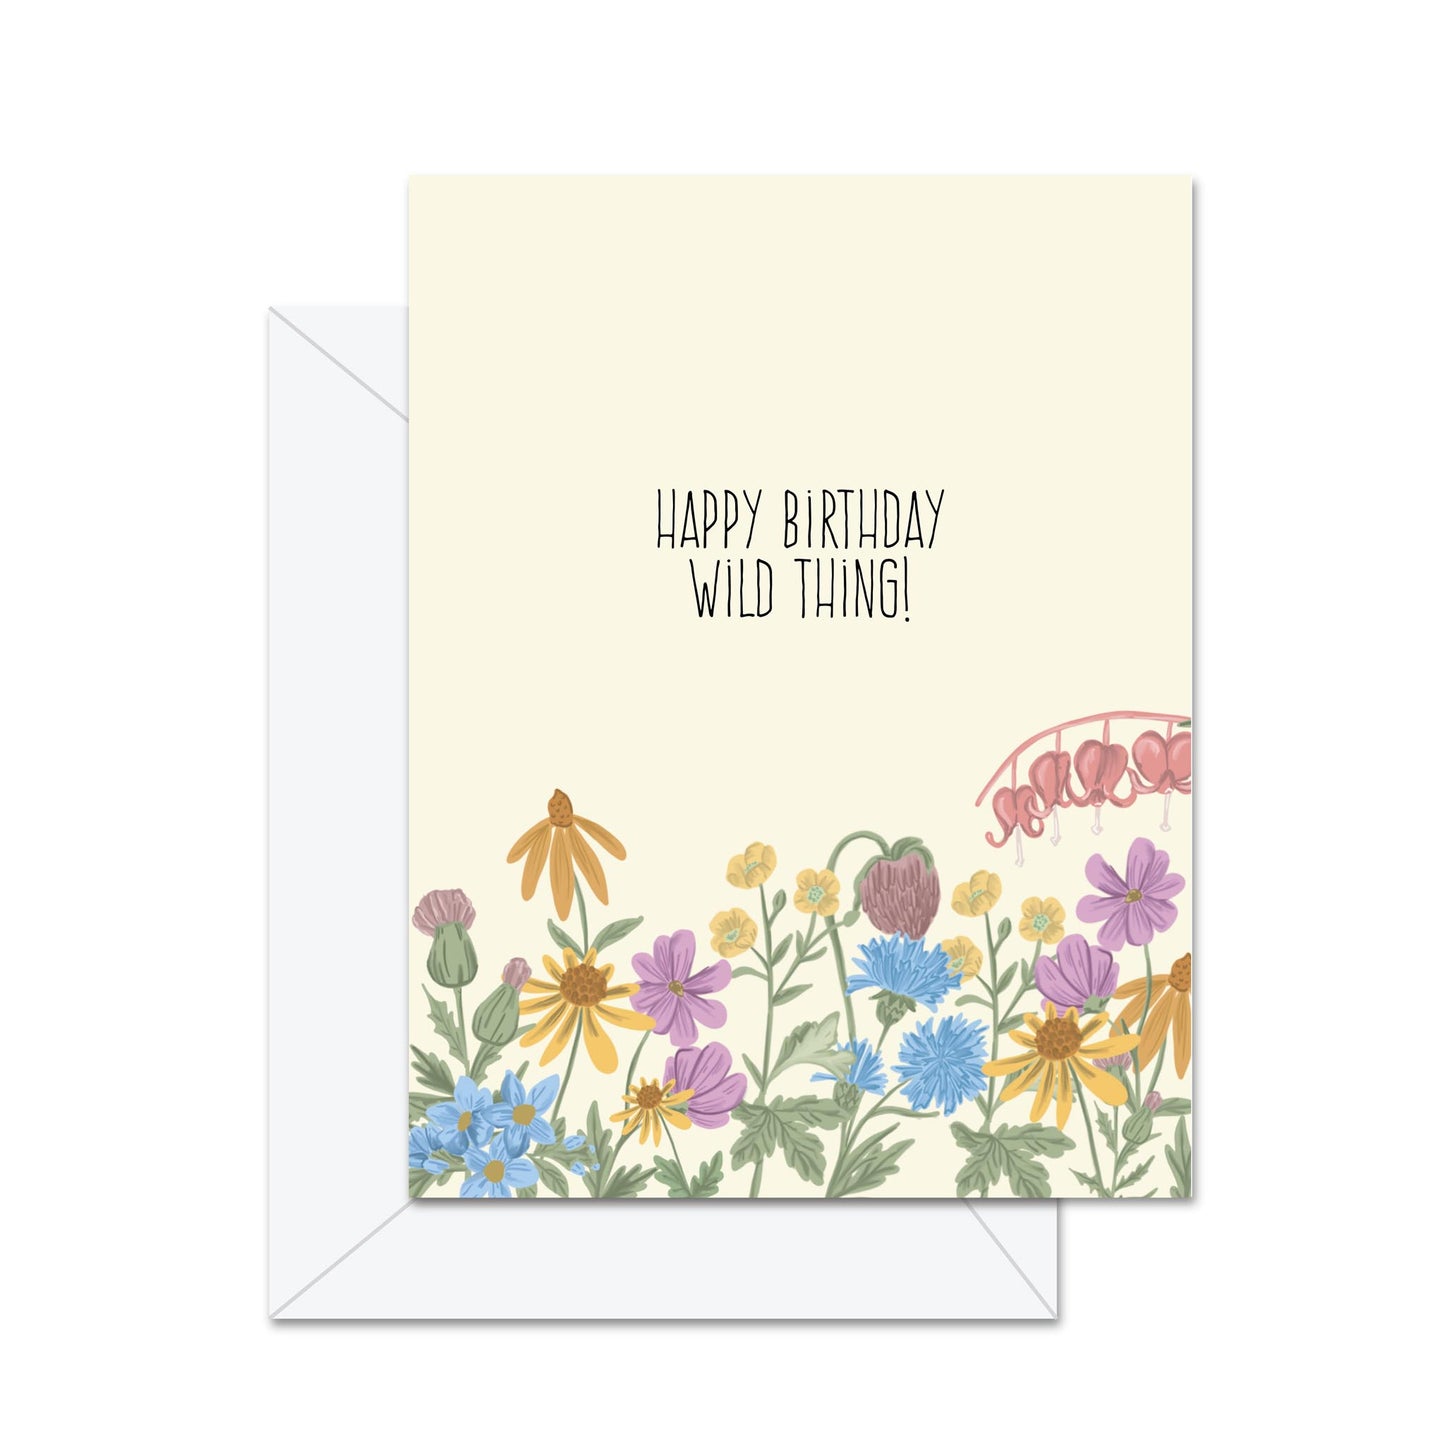 Happy Birthday Wild Thing! - Greeting Card